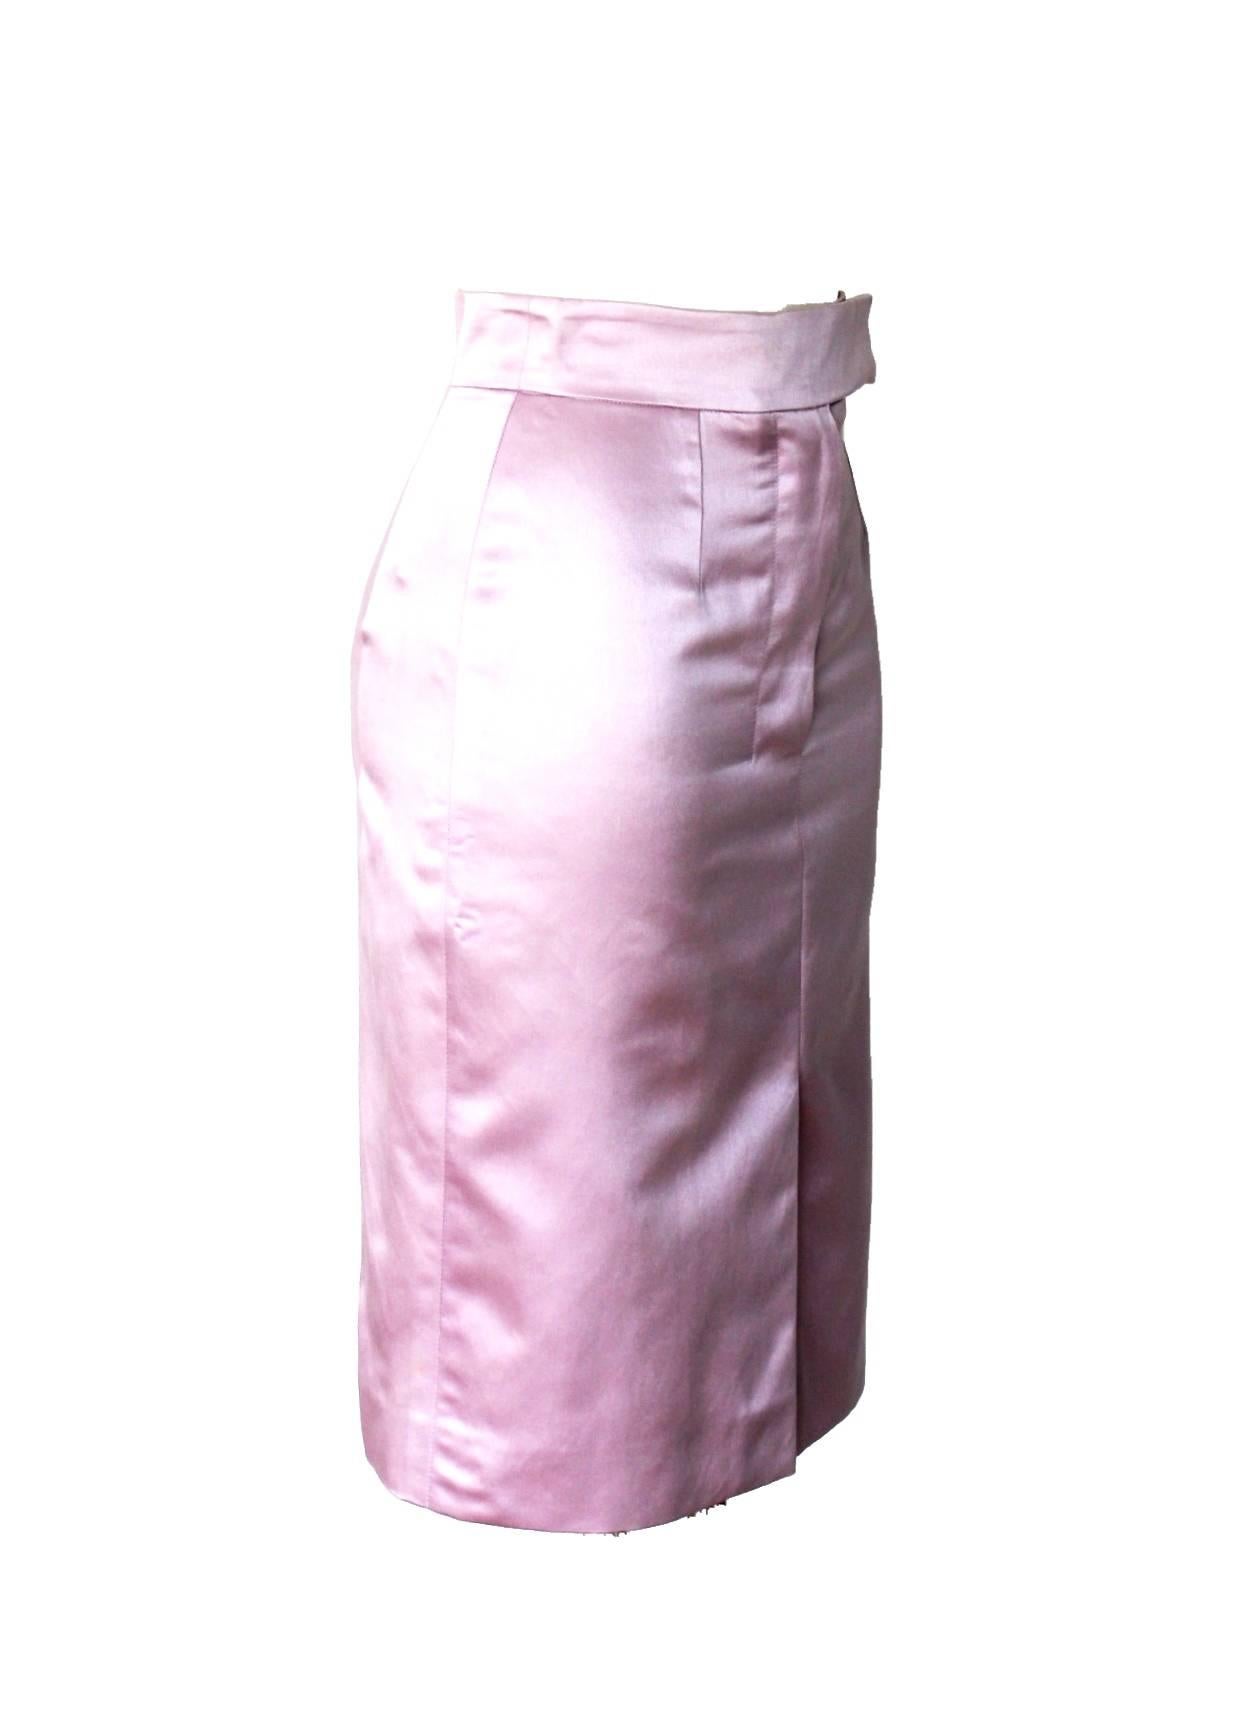 tom ford pink skirt